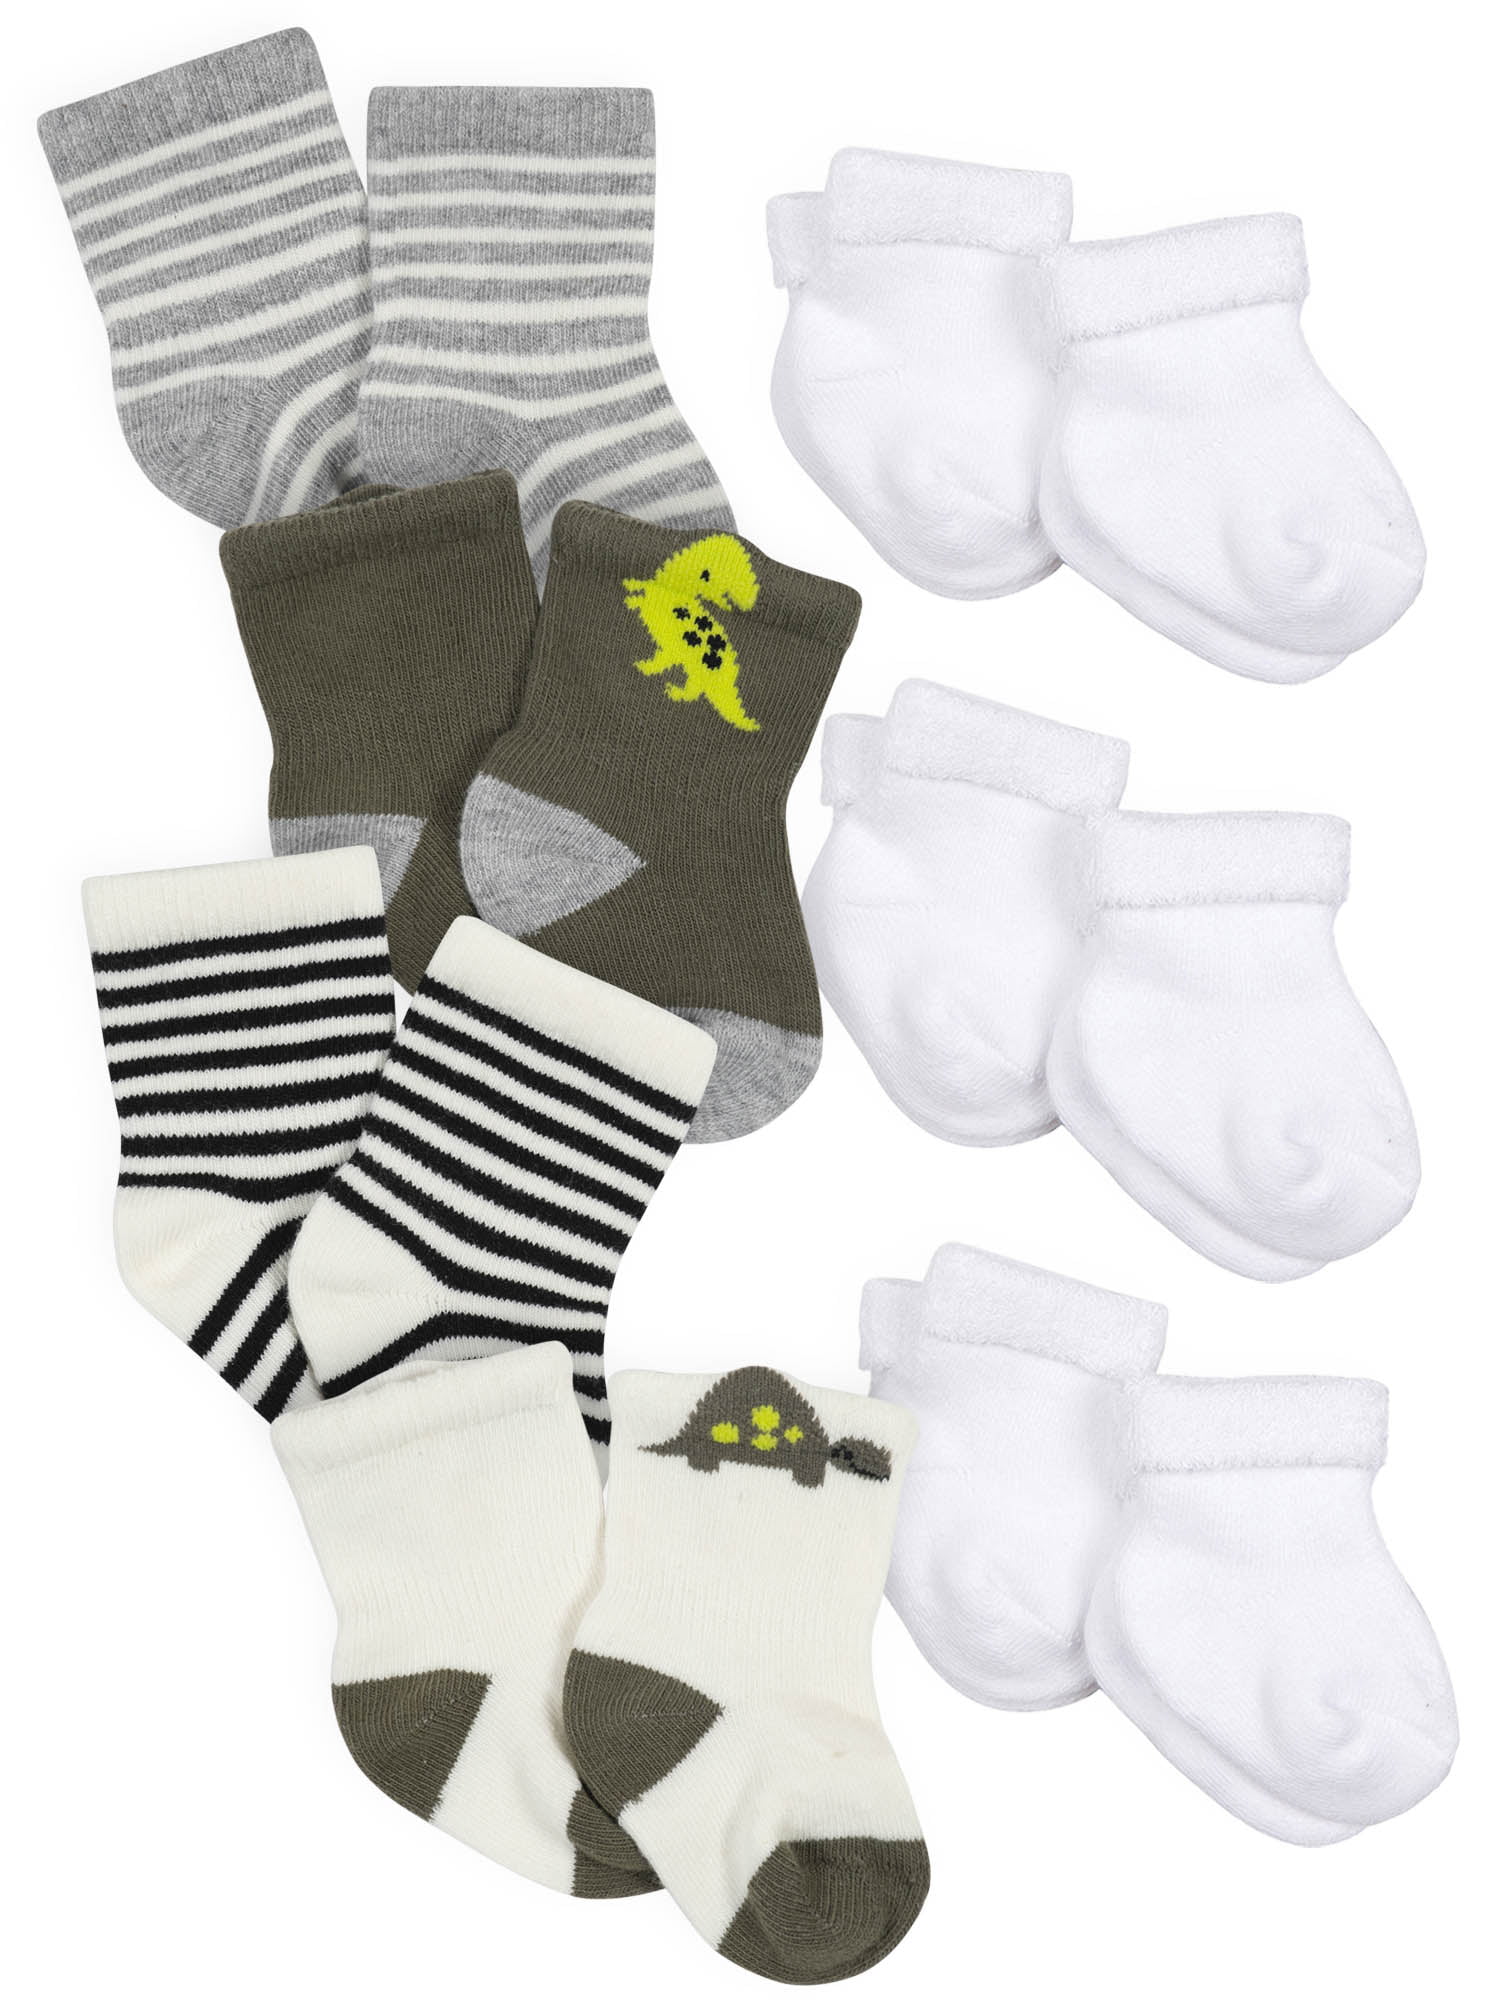 New Born Baby Babies white soft Sports socks 0-2.5 everyday wear 